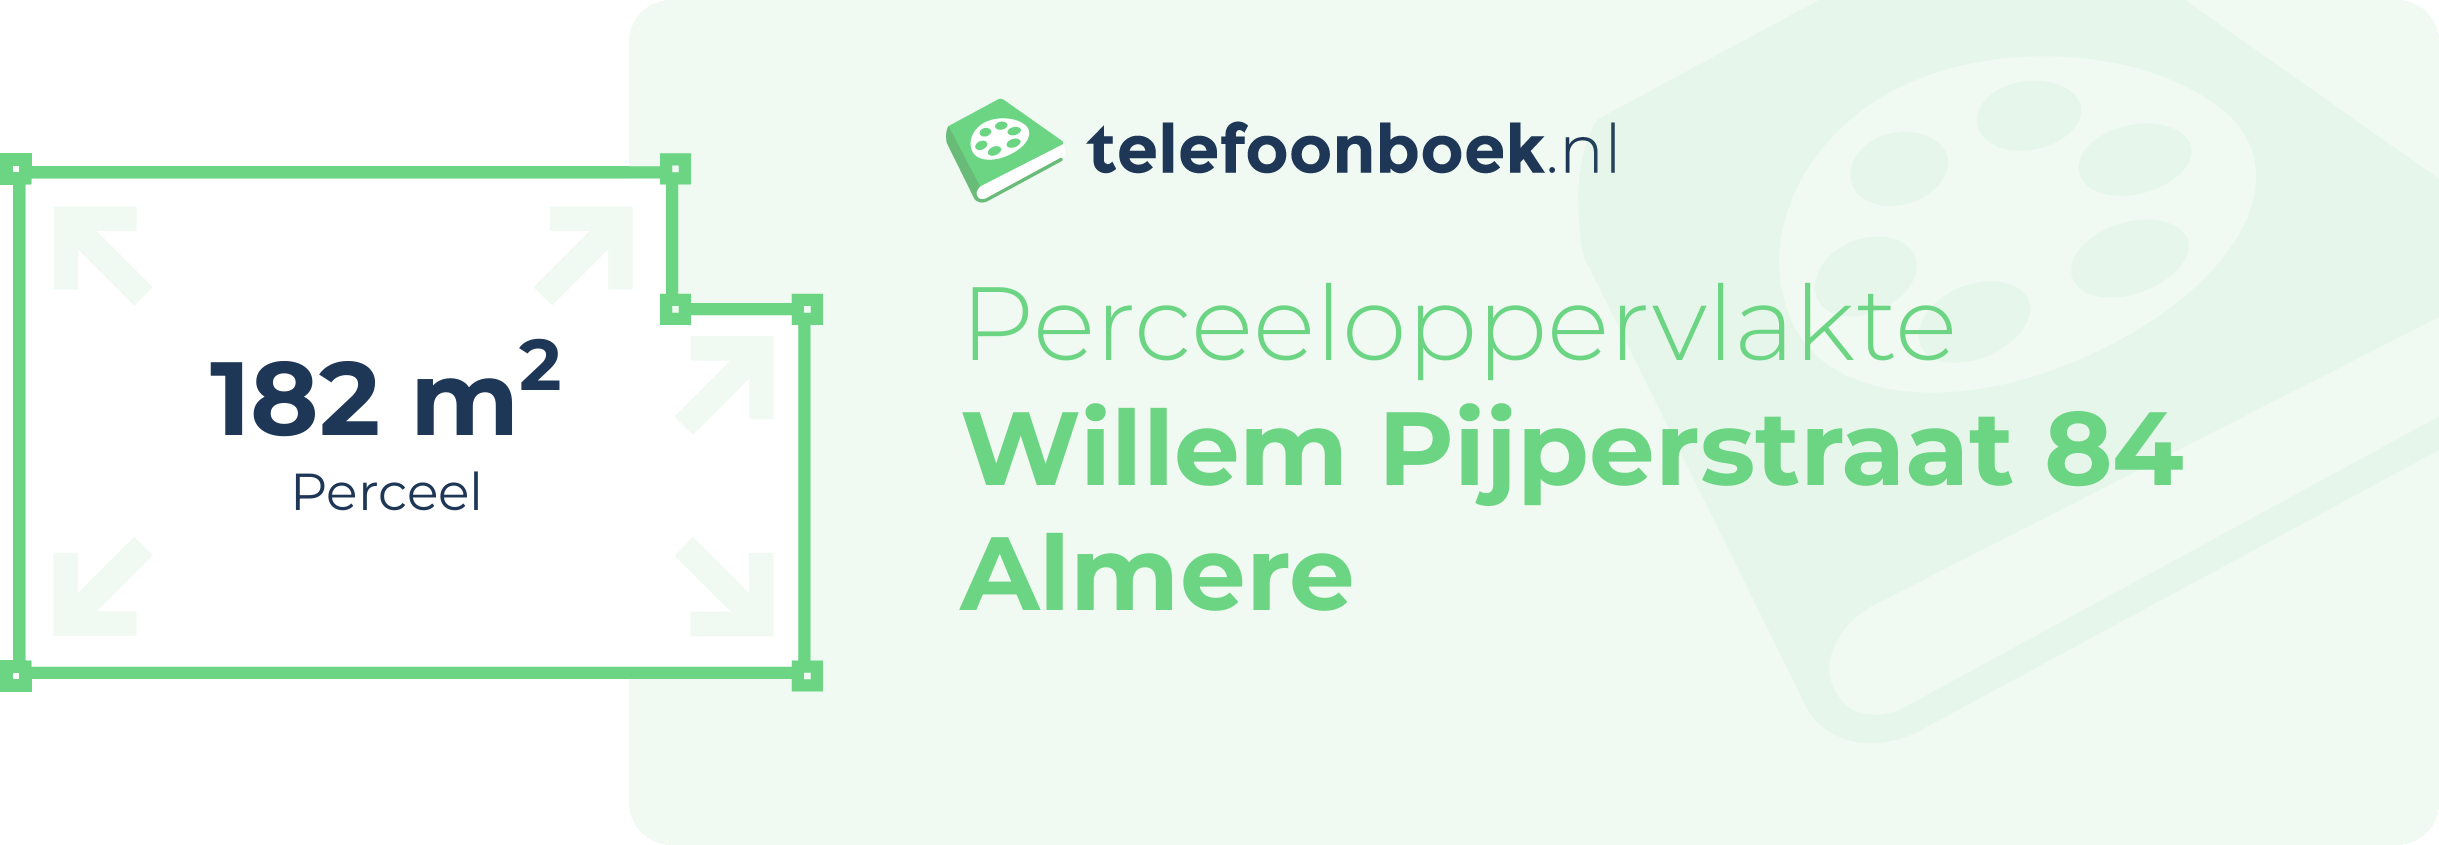 Perceeloppervlakte Willem Pijperstraat 84 Almere